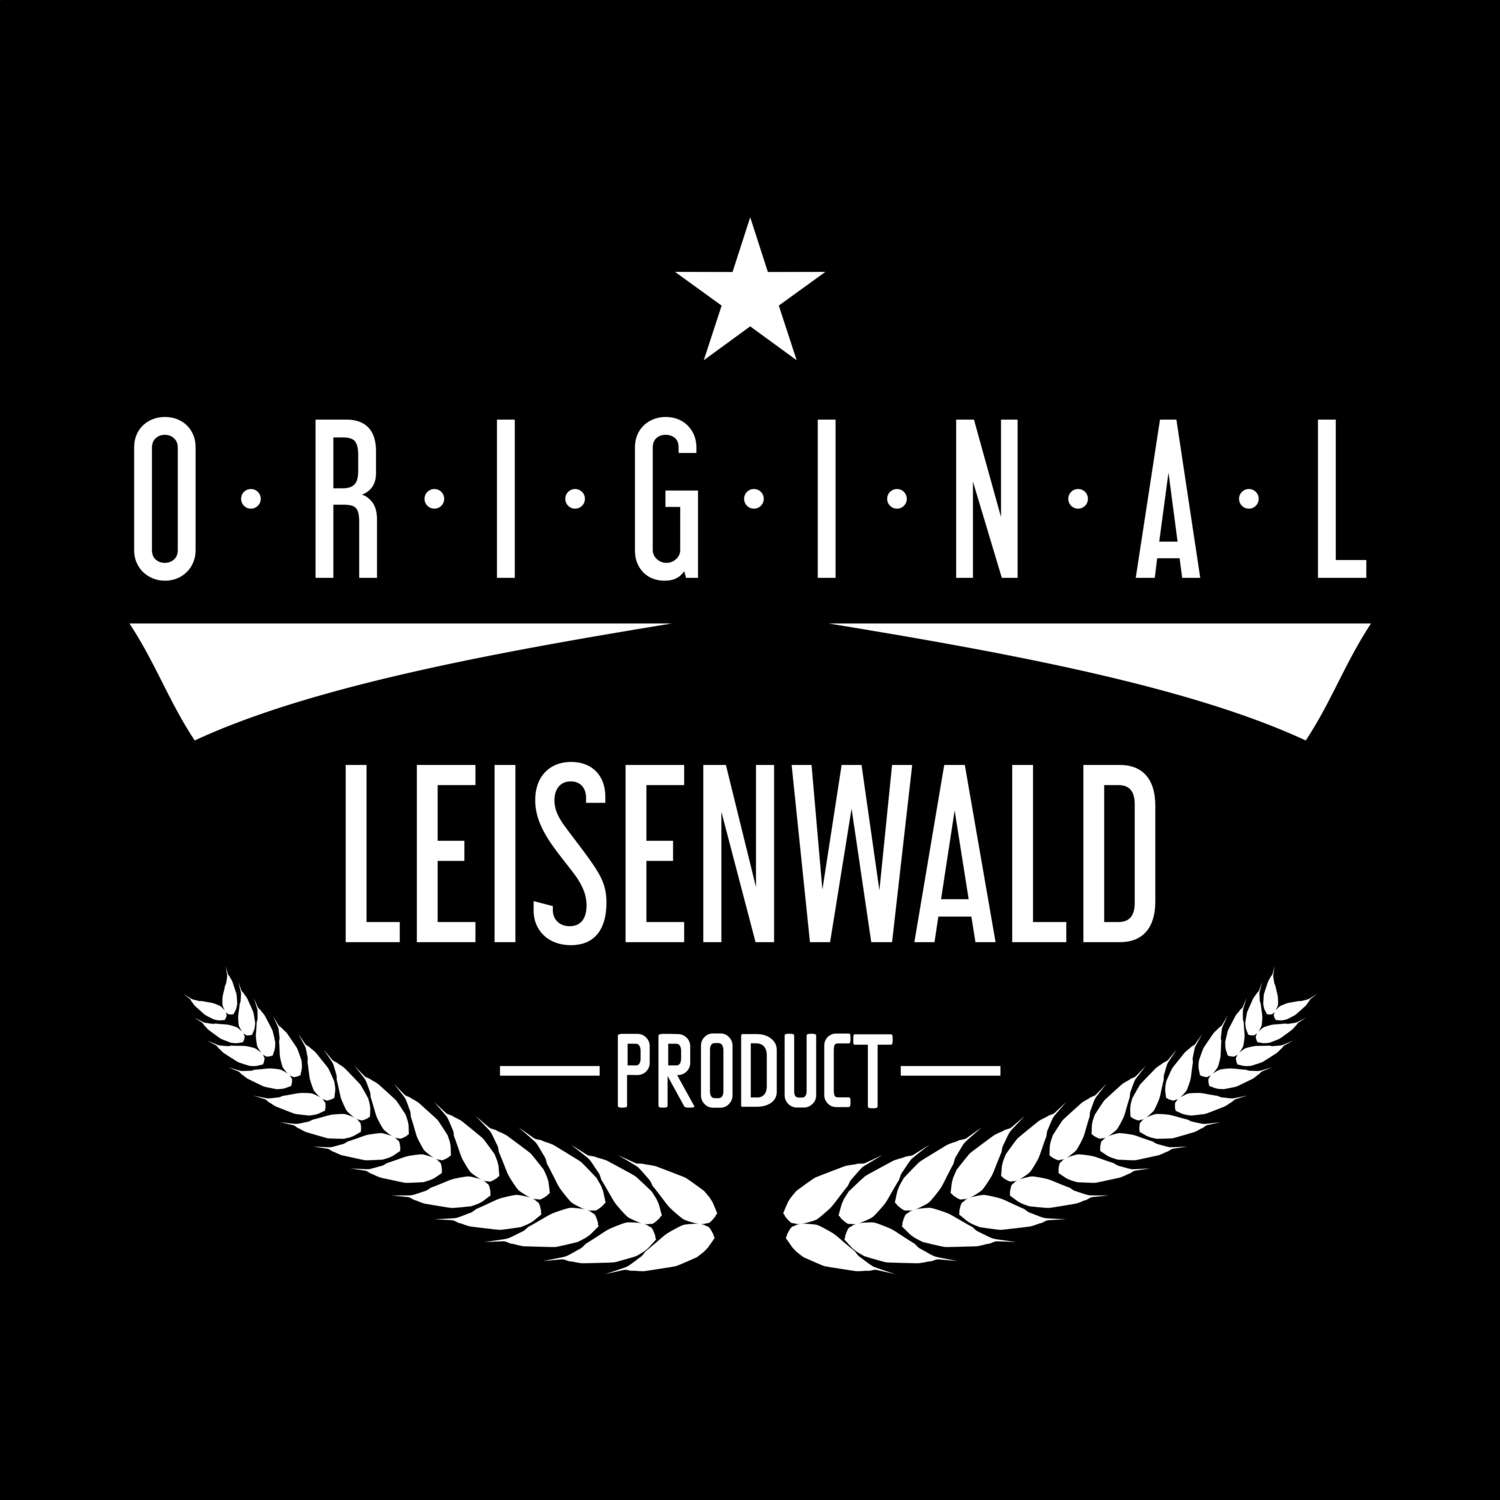 Leisenwald T-Shirt »Original Product«